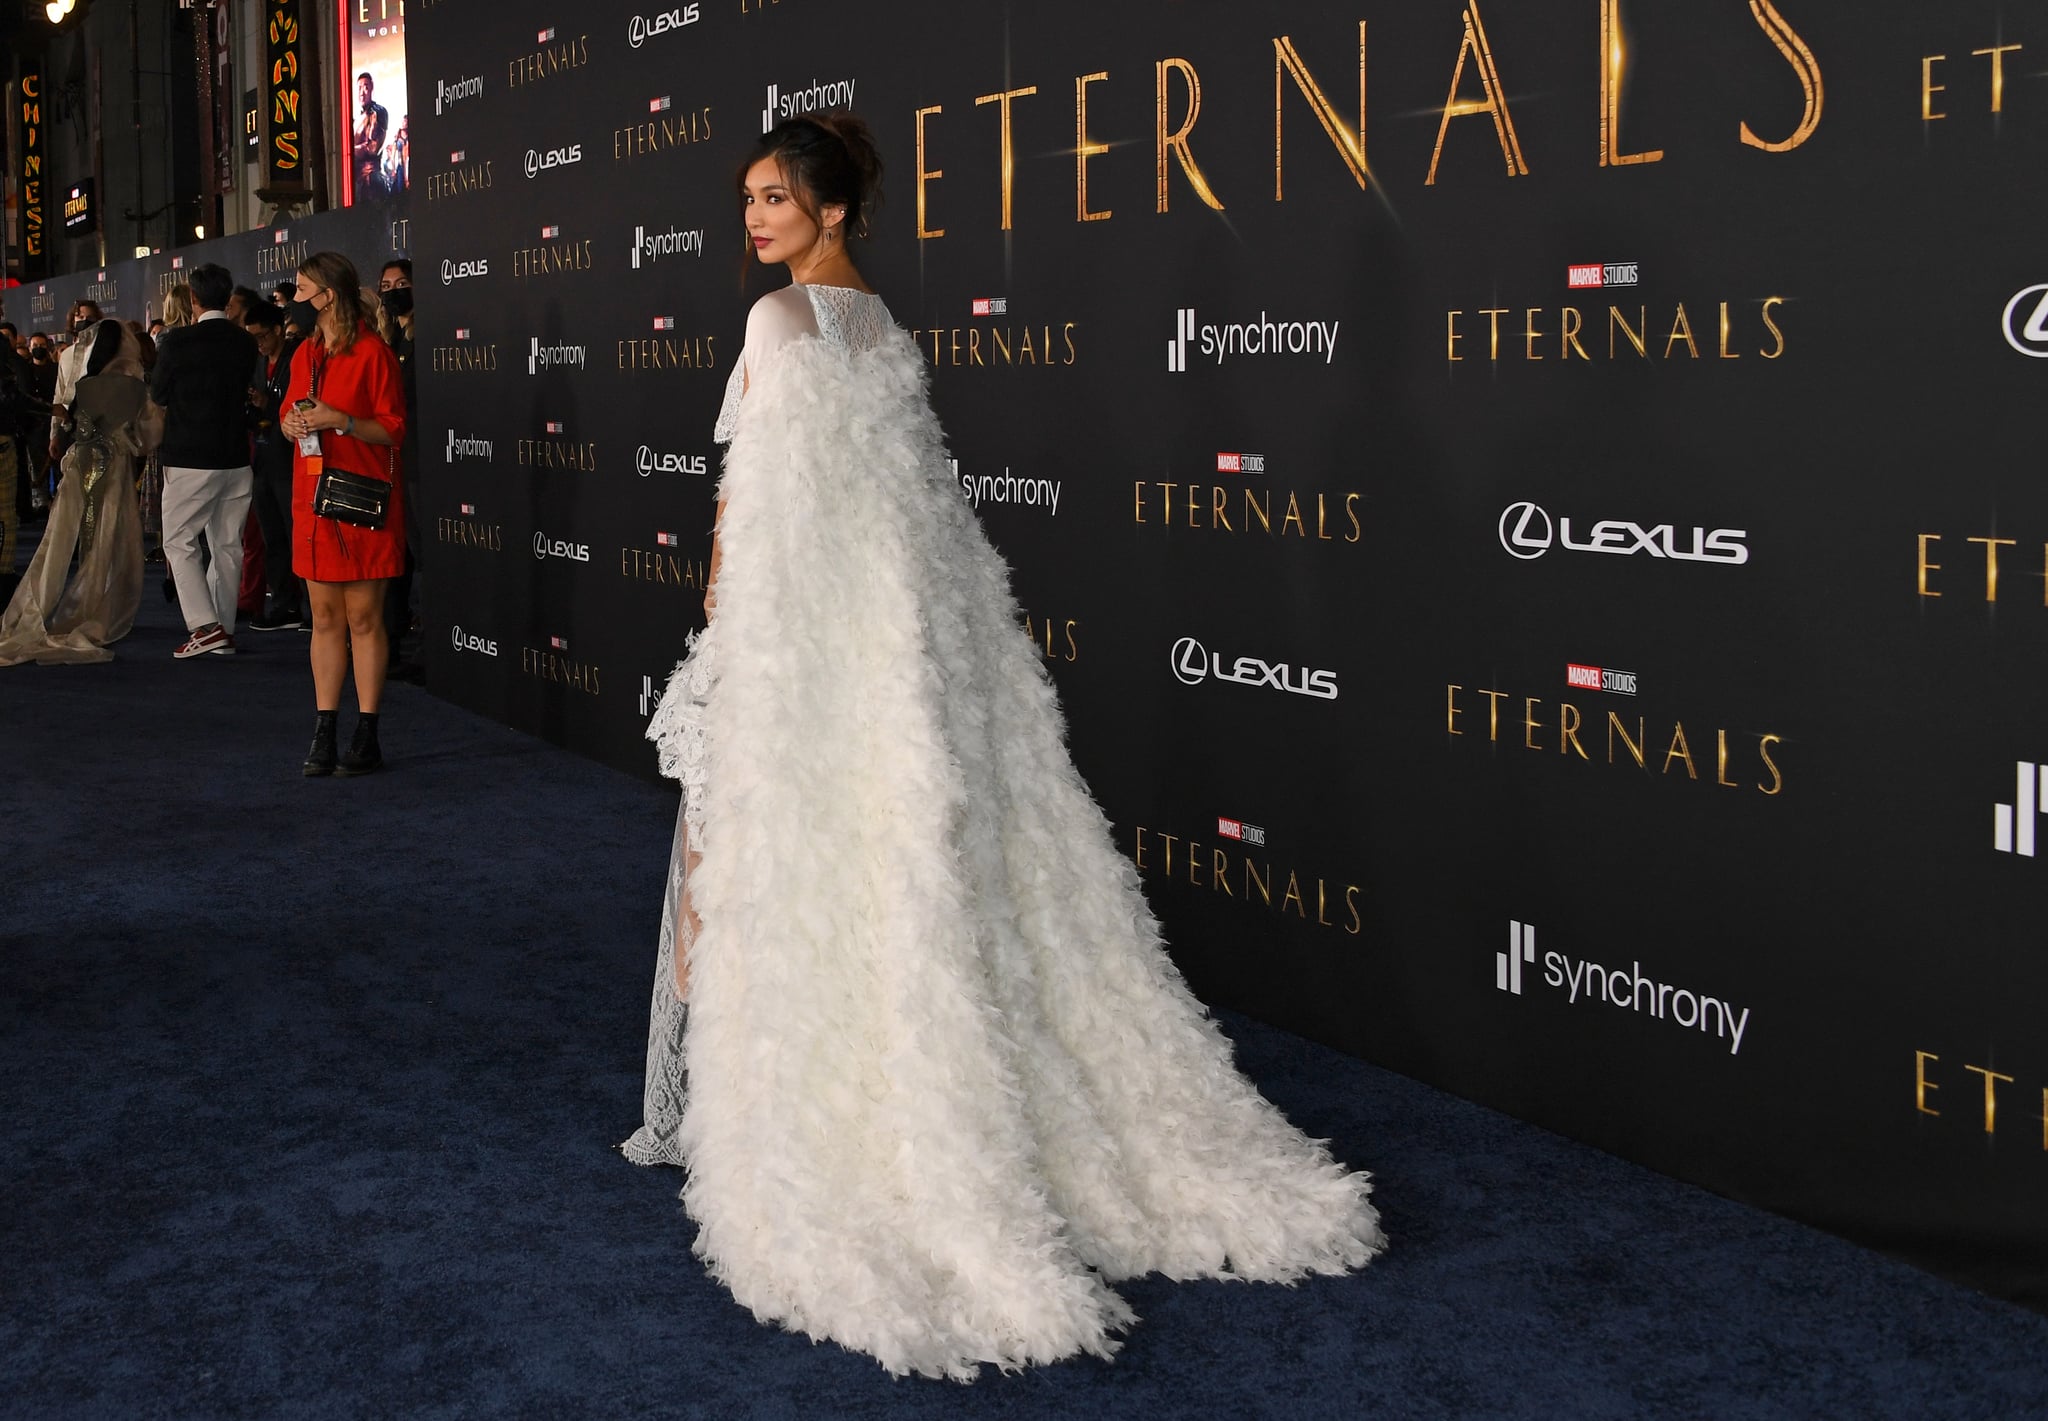 Gemma Chan Looks Angelic in Her White Louis Vuitton Dress